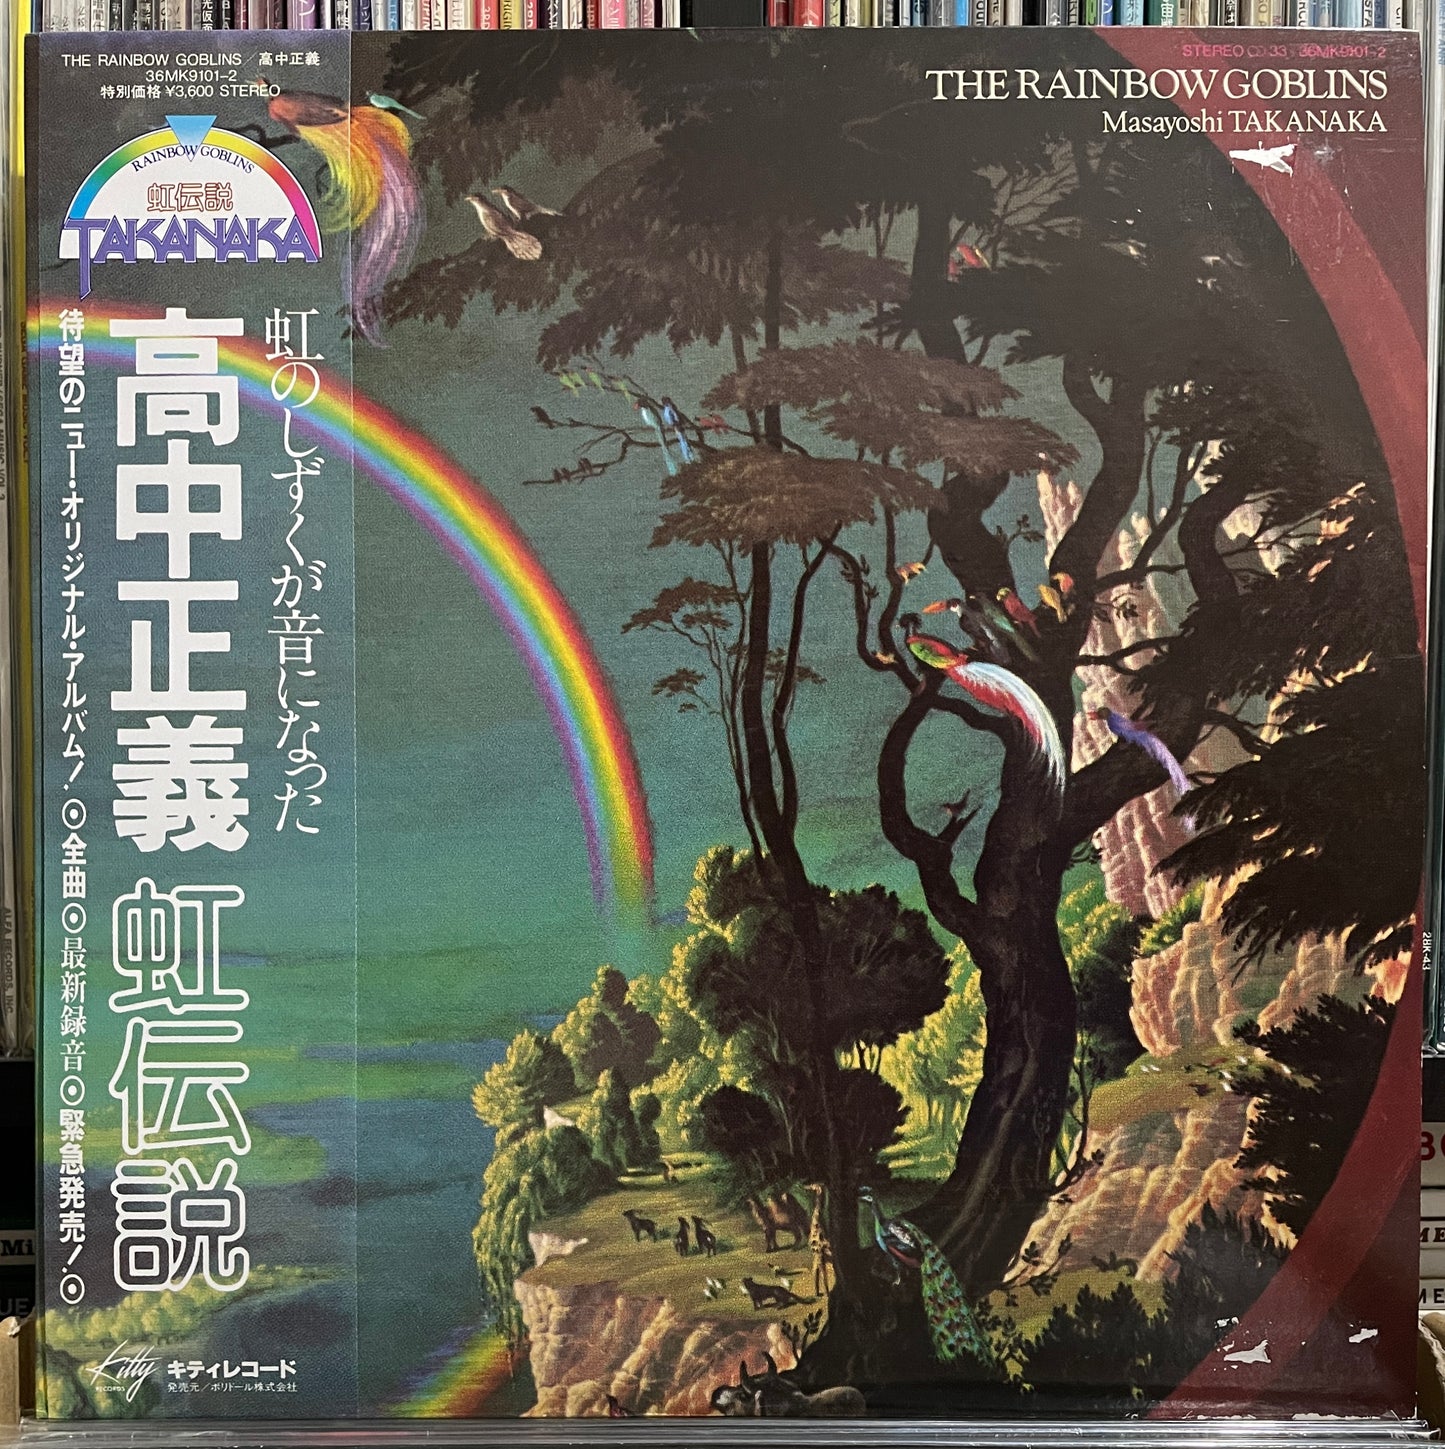 Masayoshi Takanaka “The Rainbow Goblins” (1981)